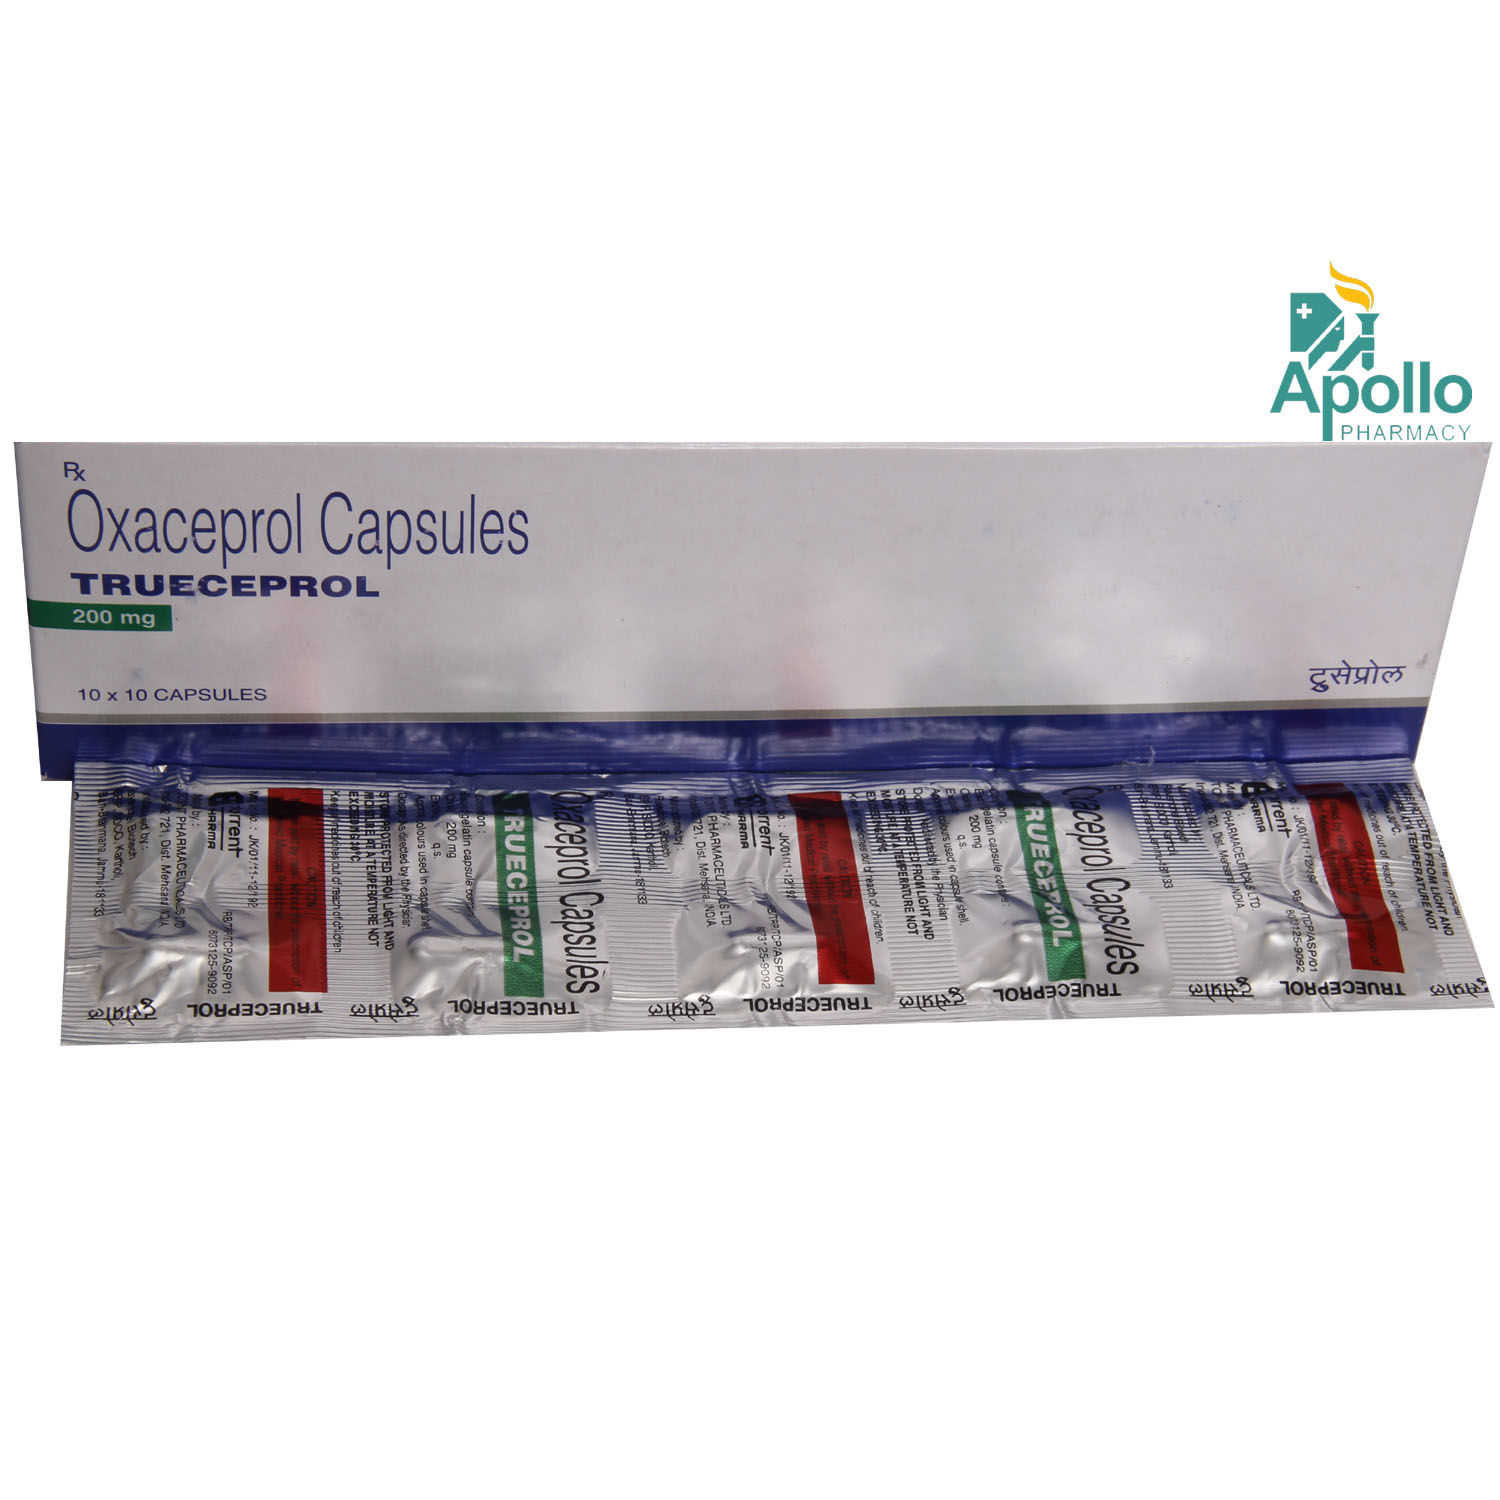 Trueceprol Capsule 10's, Pack of 10 CAPSULES